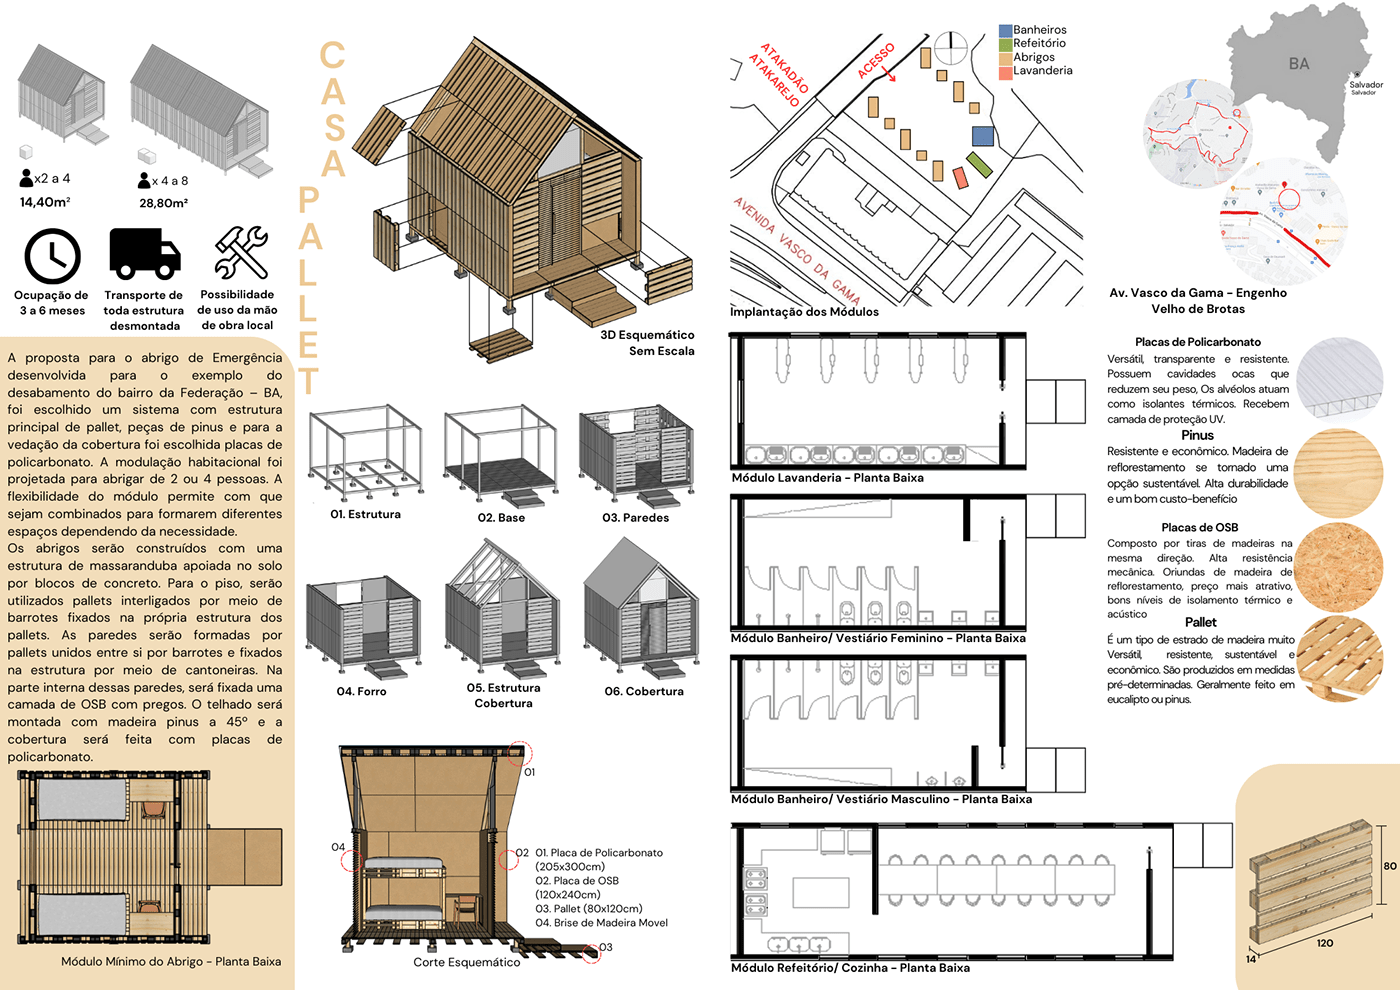 3D abrigo emergencial architecture arquitectura ARQUITETURA concept emergency shelter Project projeto